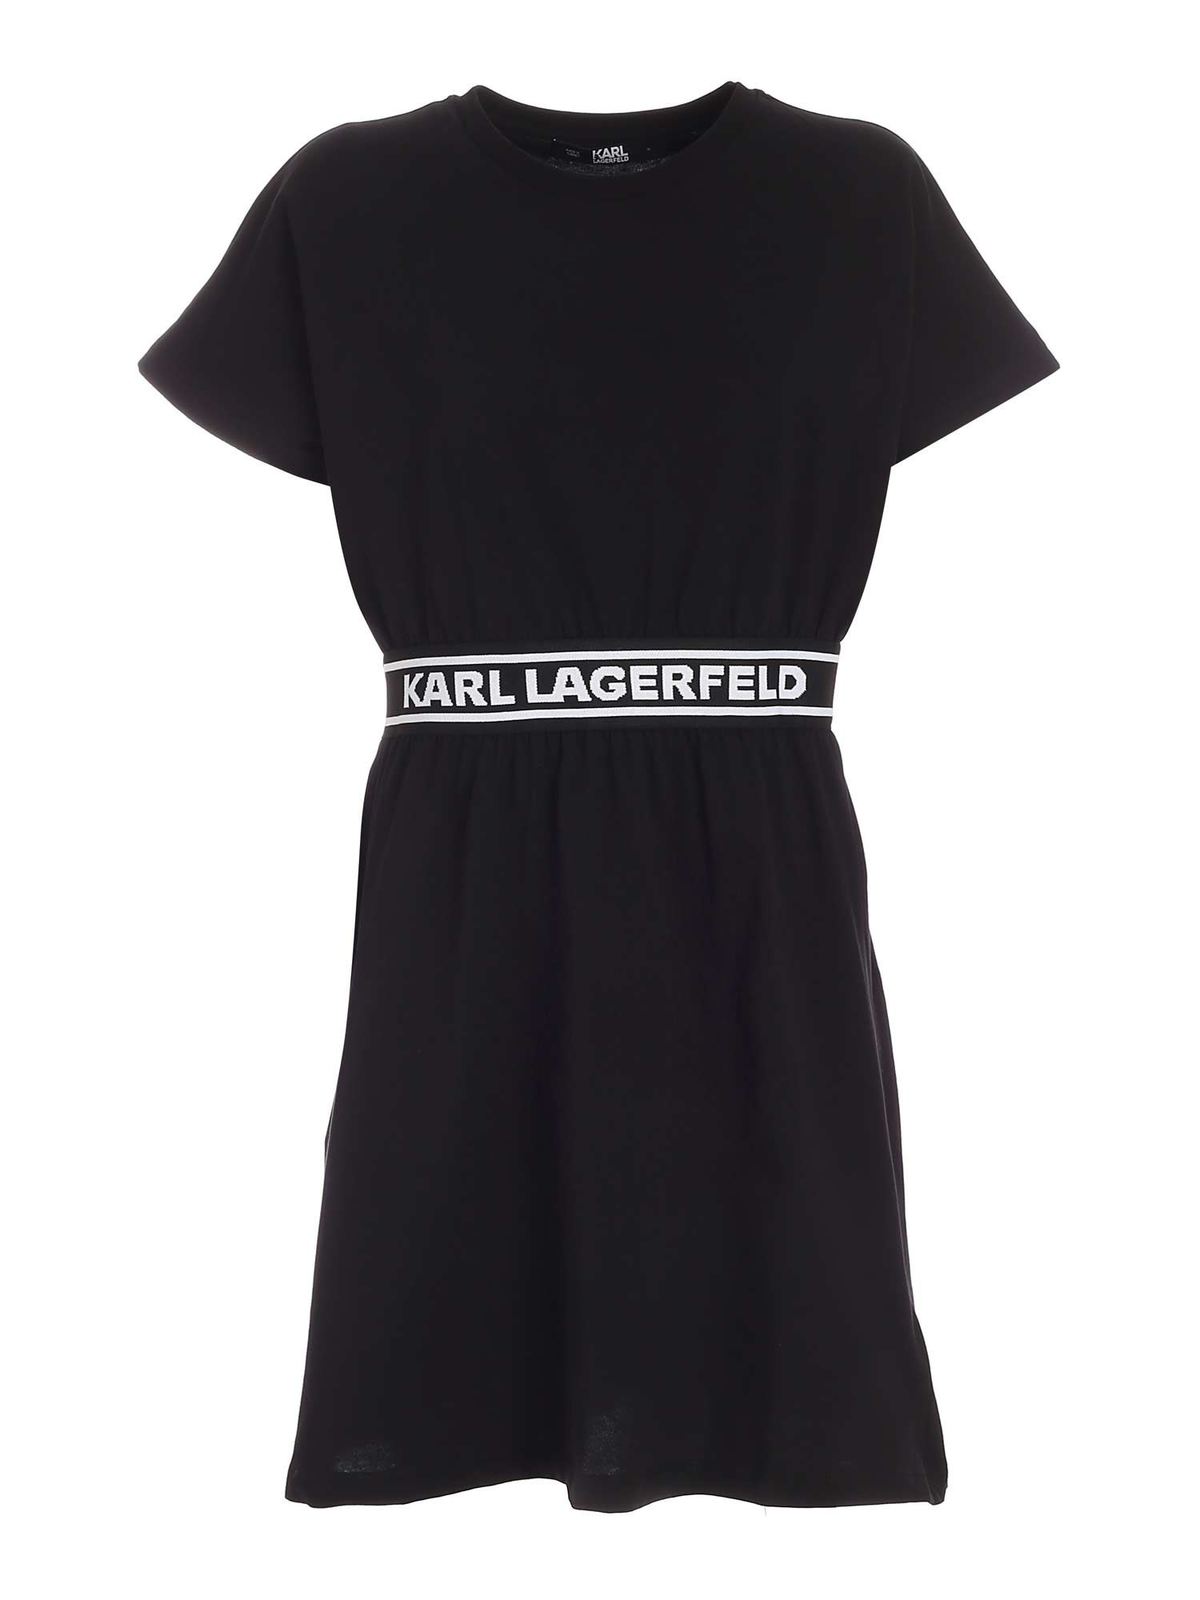 KARL LAGERFELD BRANDED BAND DRESS IN BLACK